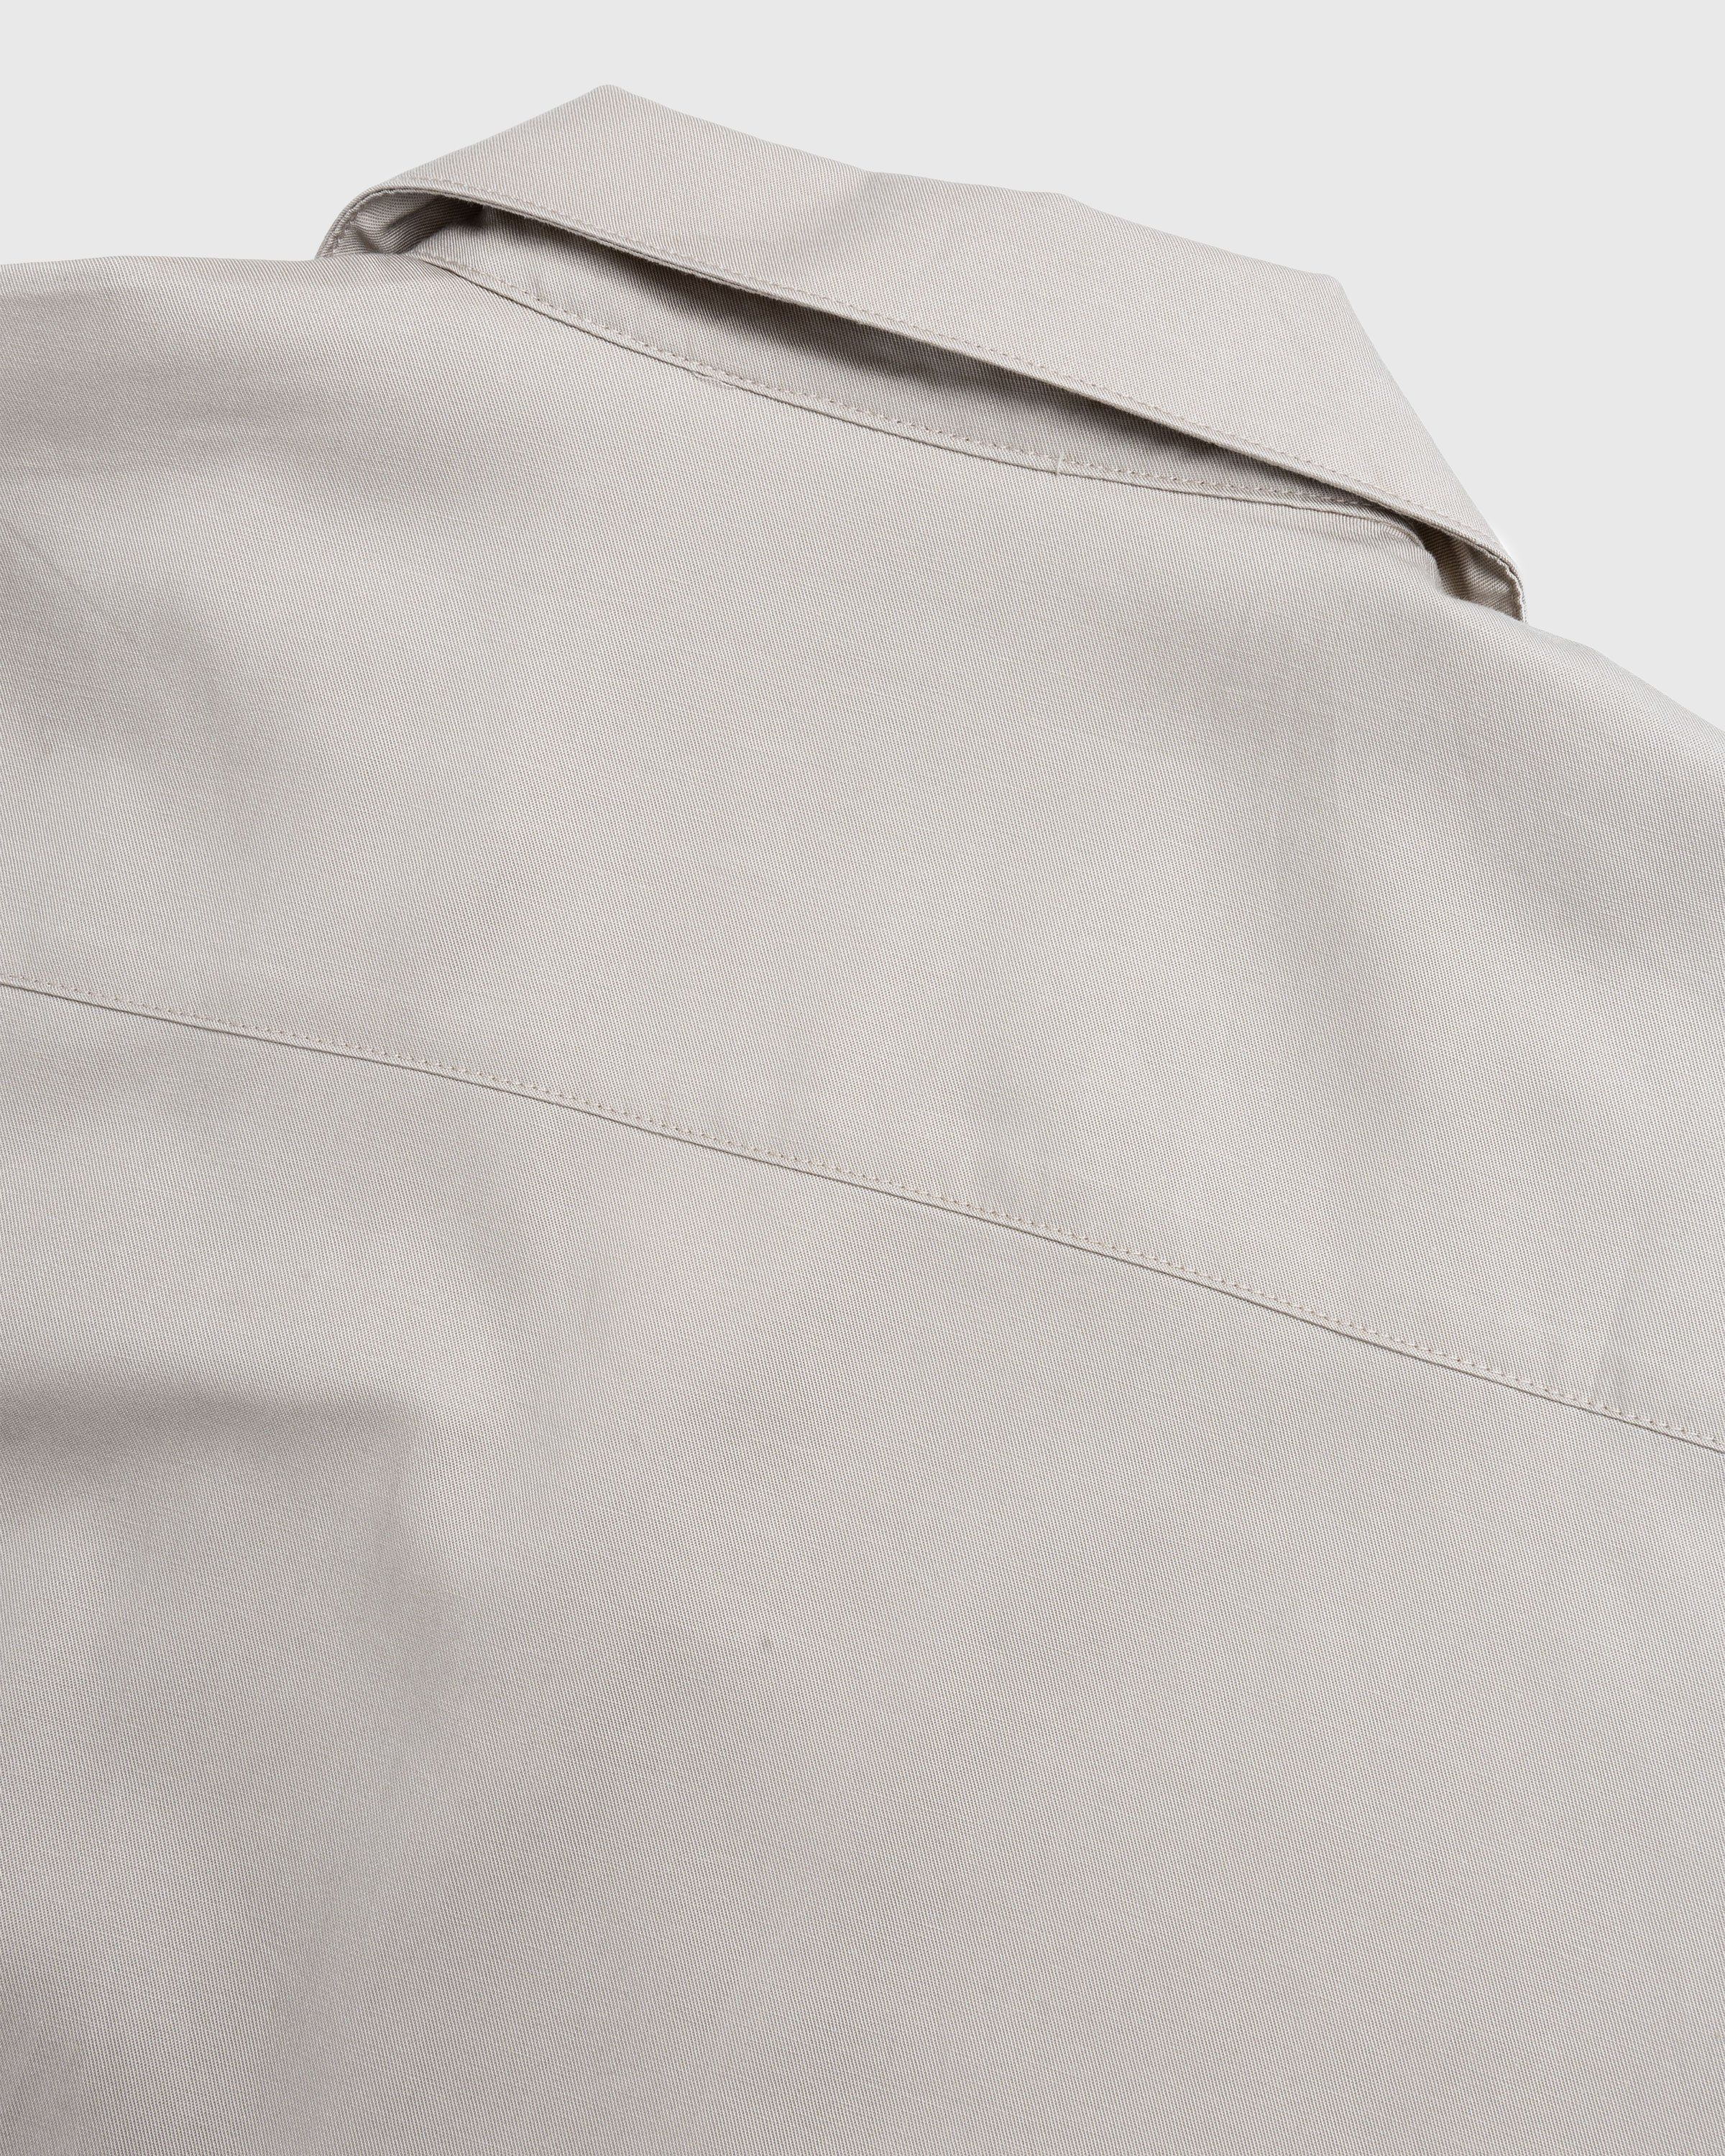 Carhartt WIP - Delray Shirt Wall/Wax - Clothing - Beige - Image 6